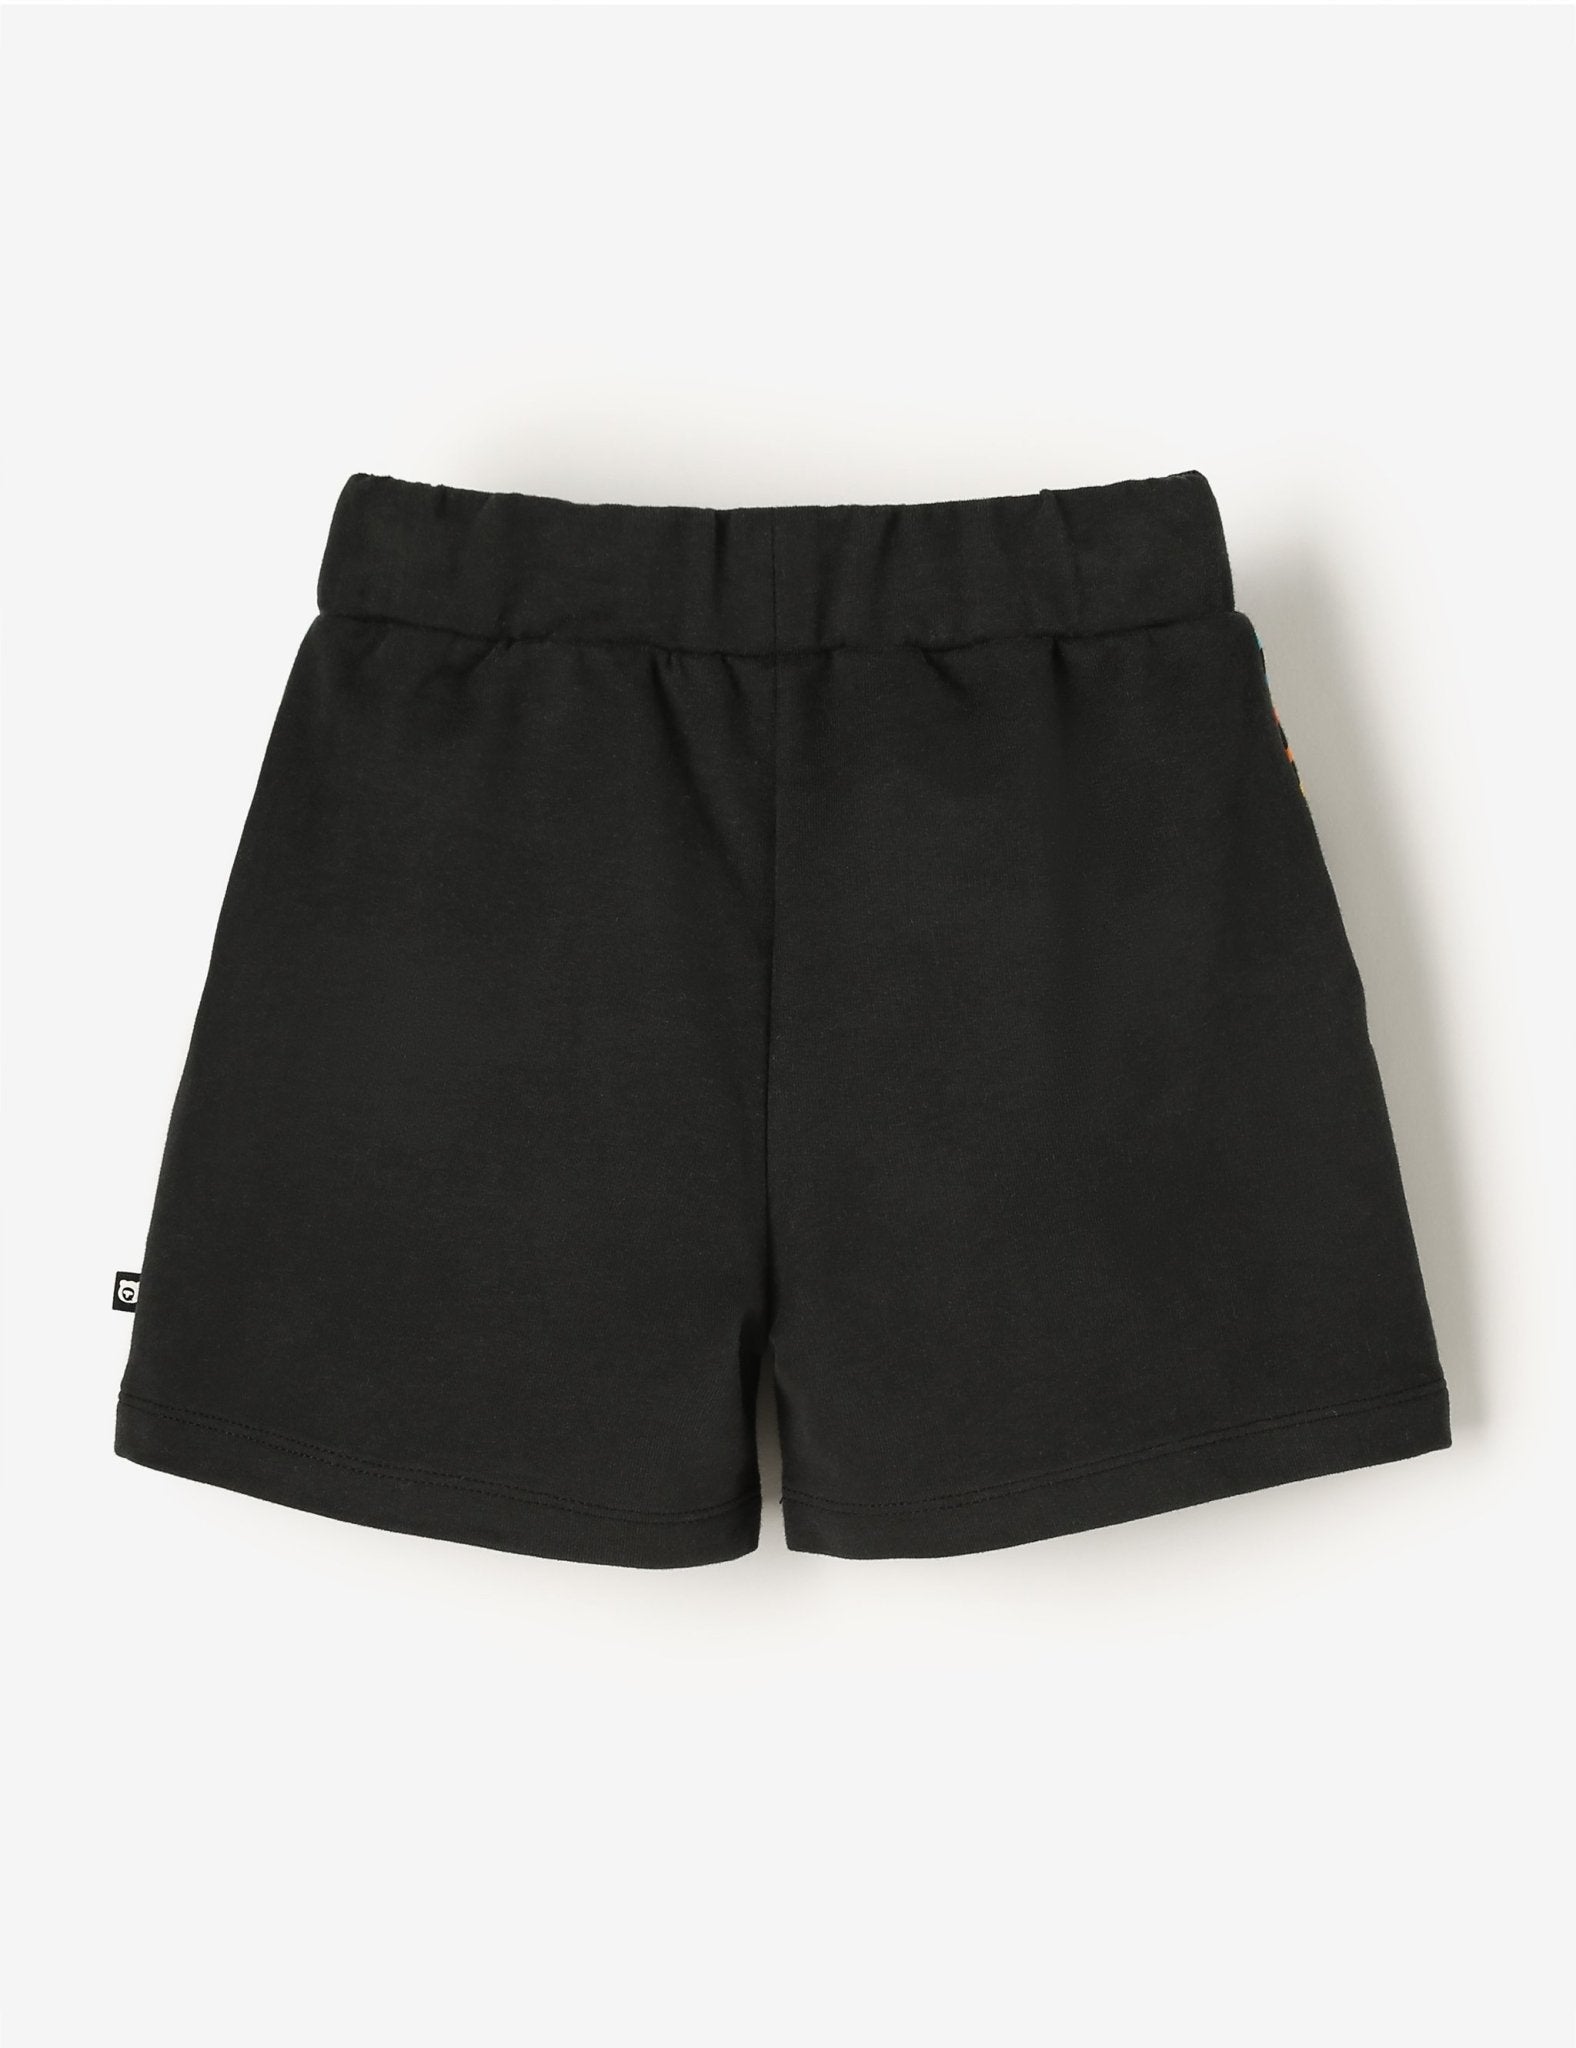 Bermuda Shorts - Black Ink - The QT